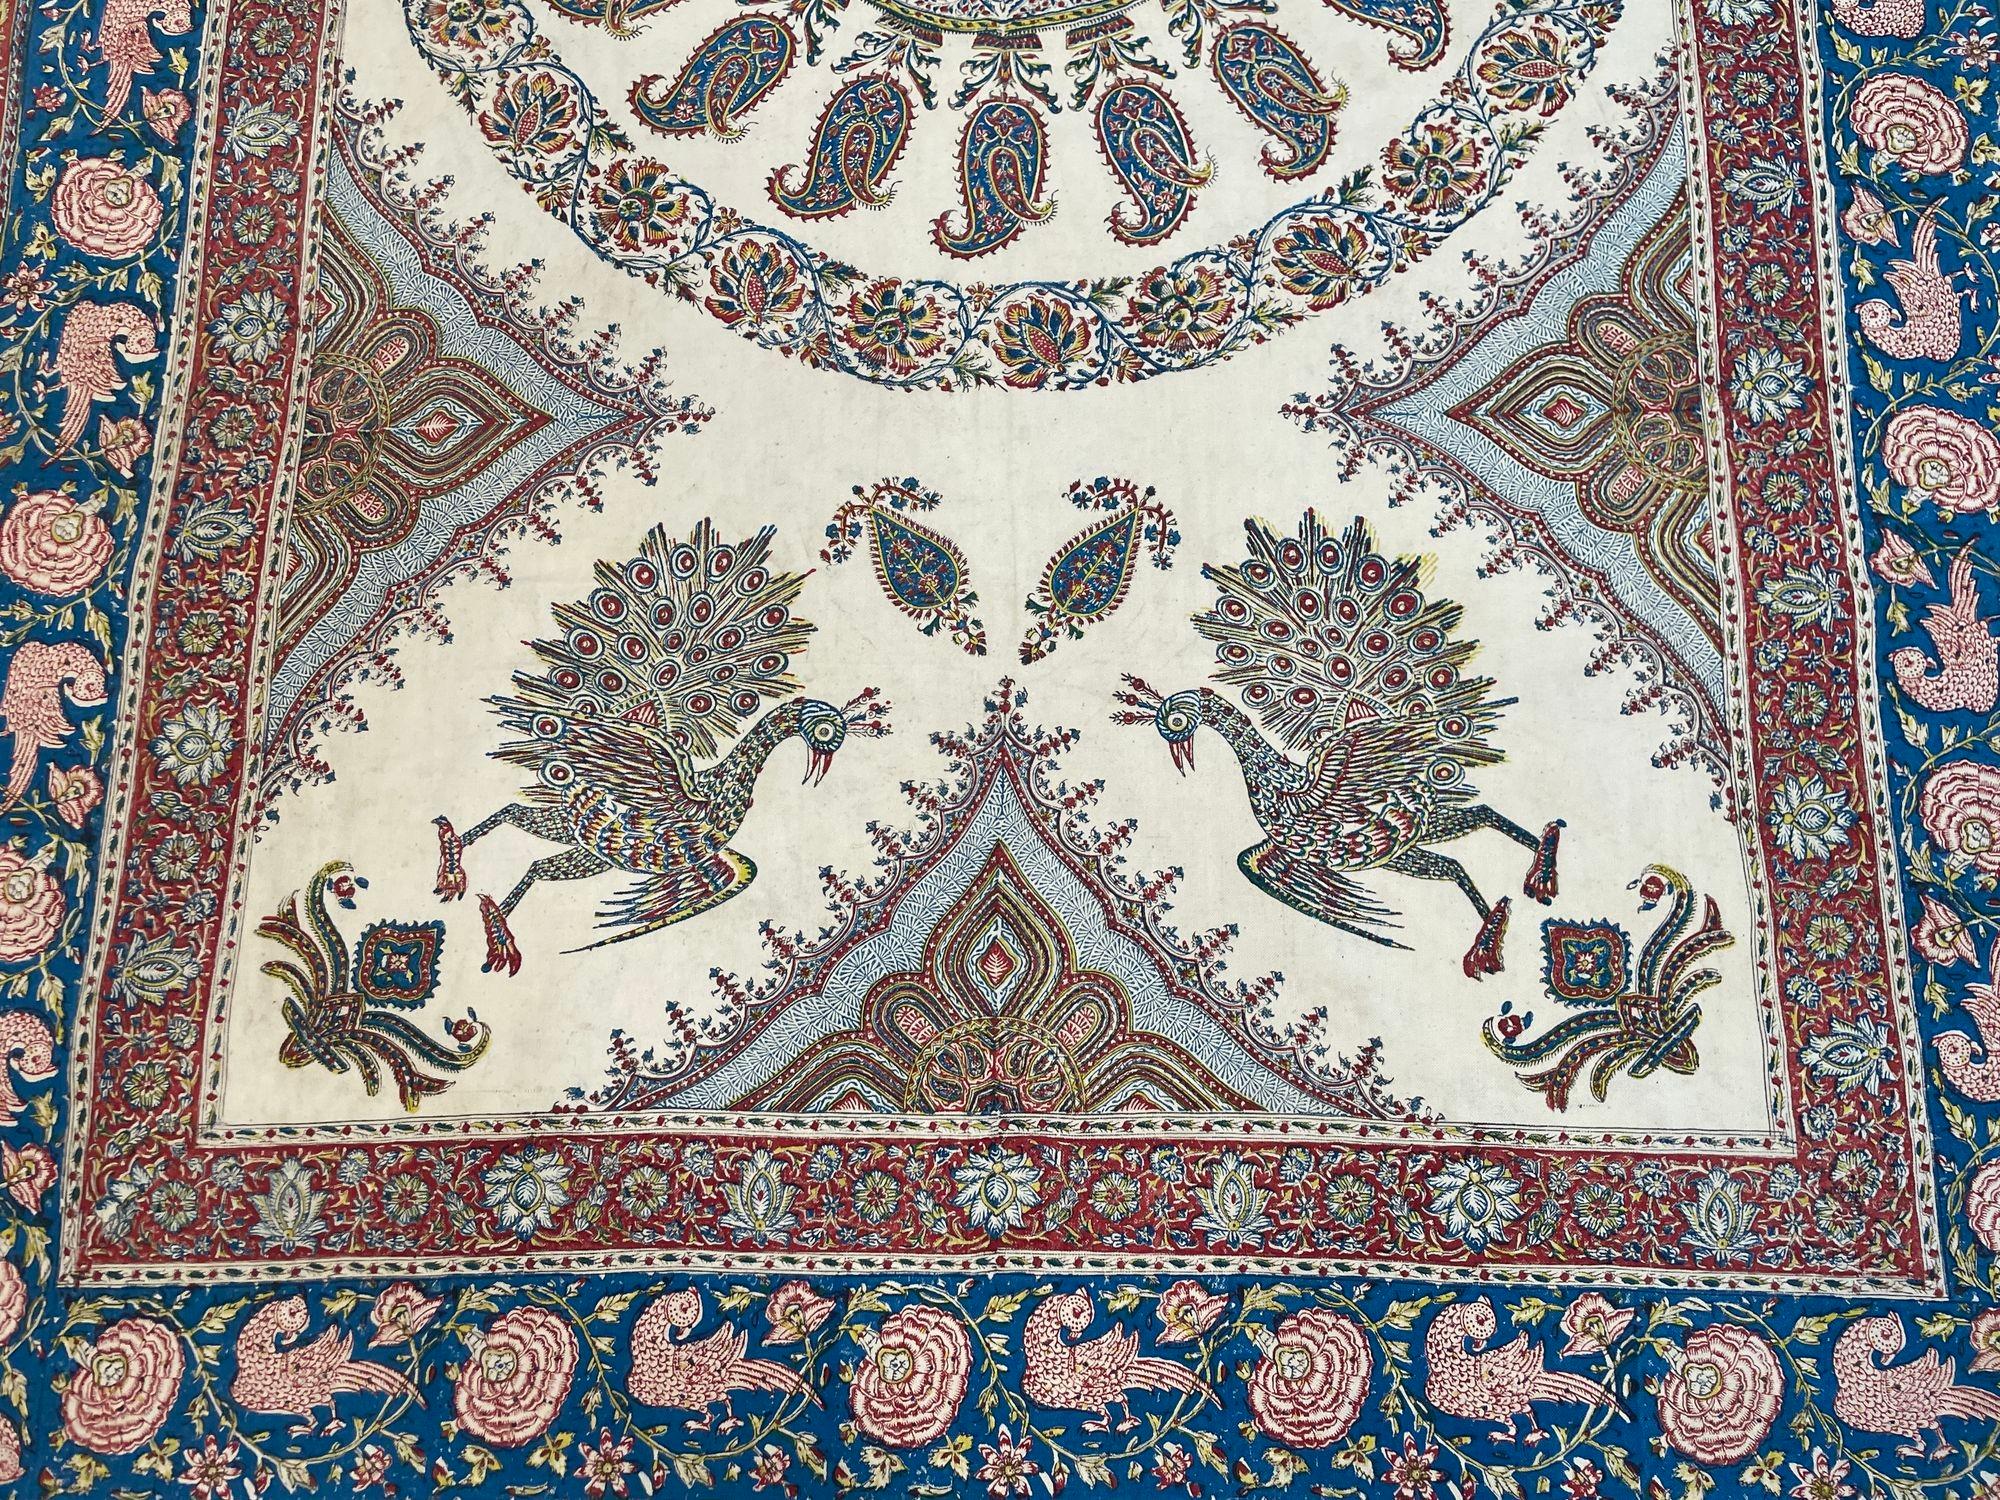 20th Century Large Isfahan Ghalamkar Persian Paisley Textile Block Printed 1950s For Sale